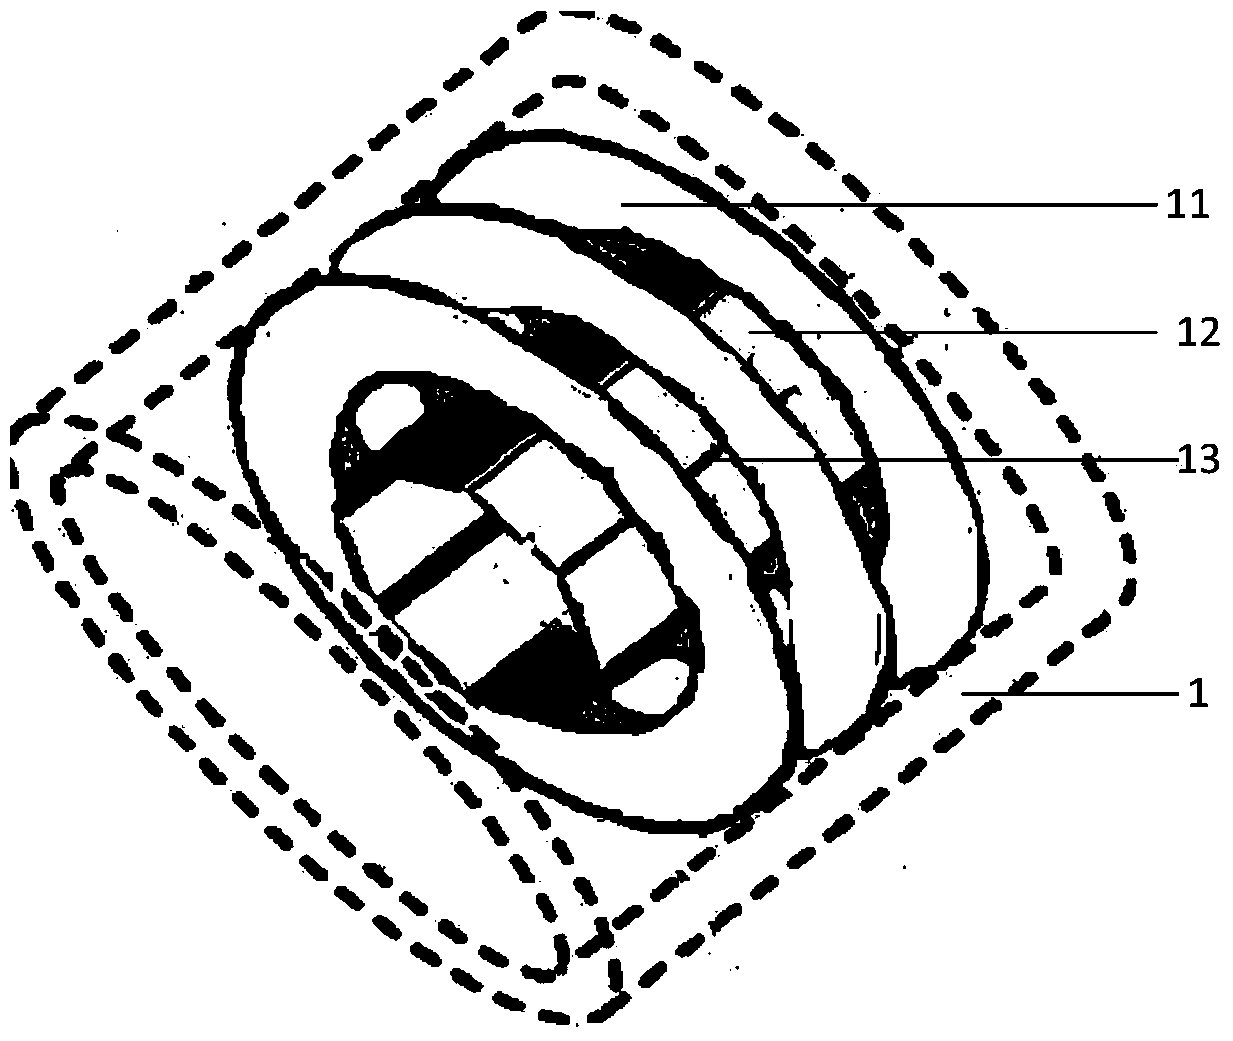 Geometric calibration method for SPECT (single photon emission computed tomography) system